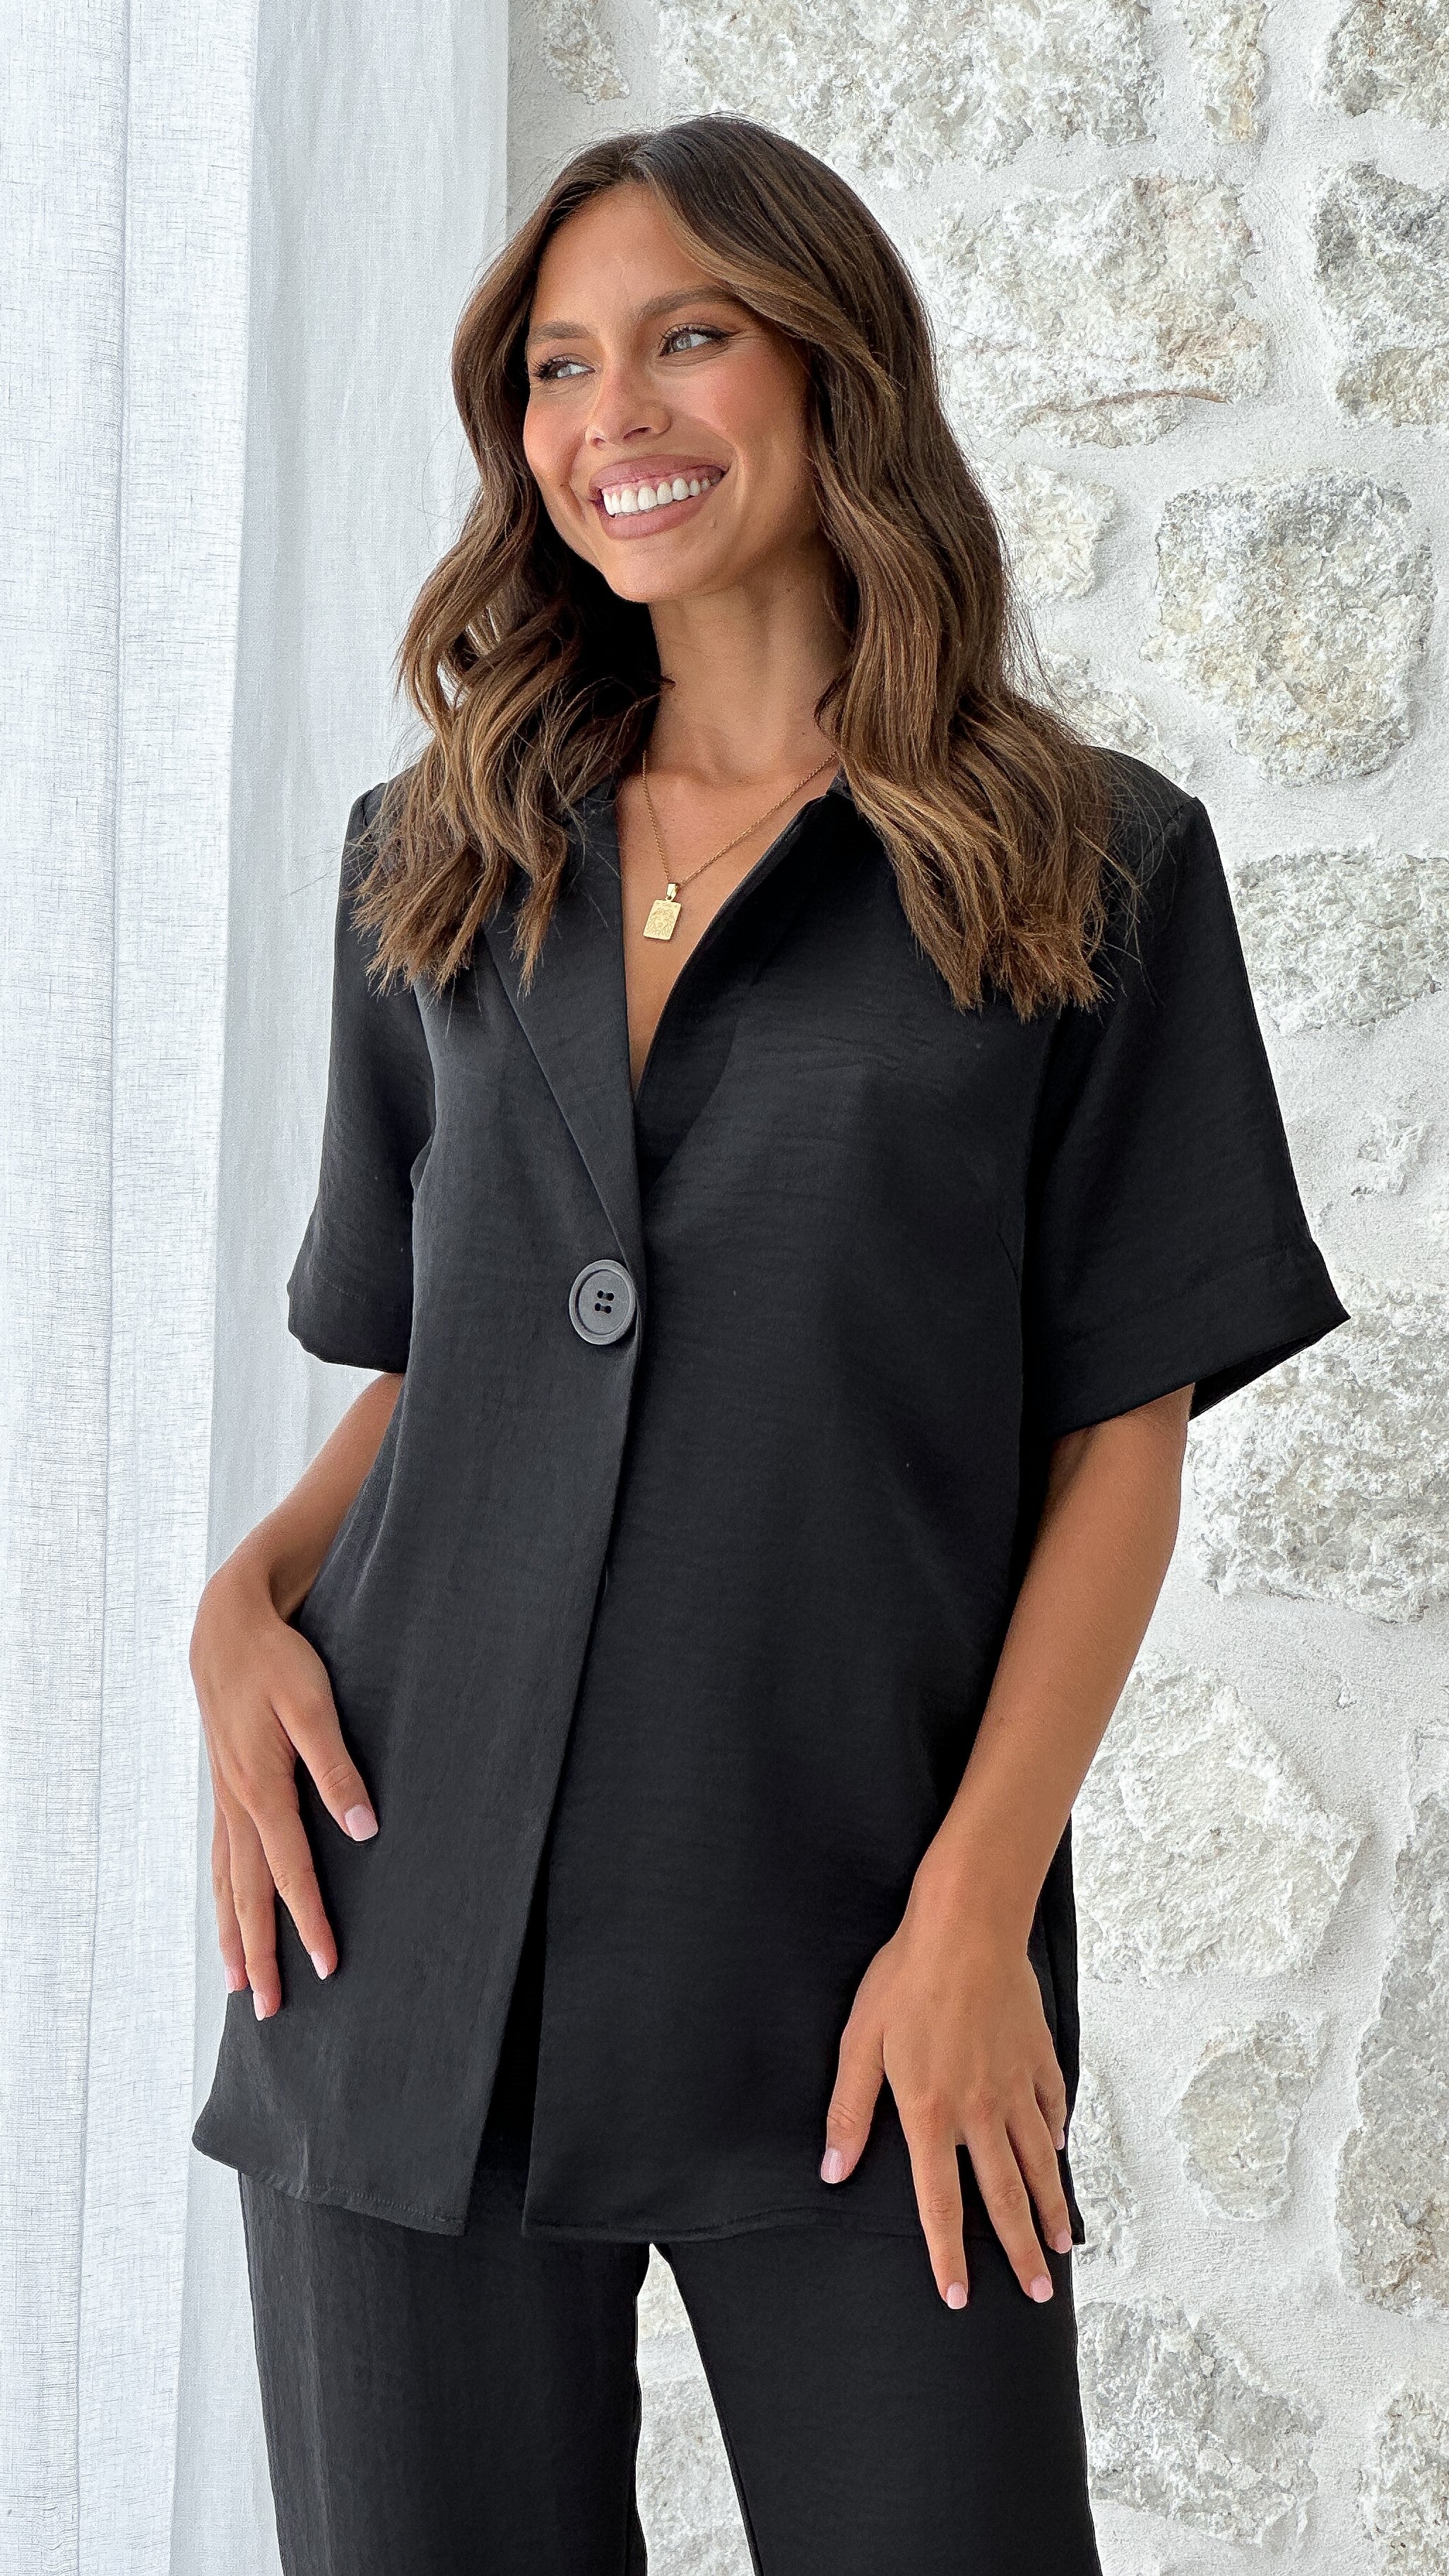 Imogen Button Shirt - Black